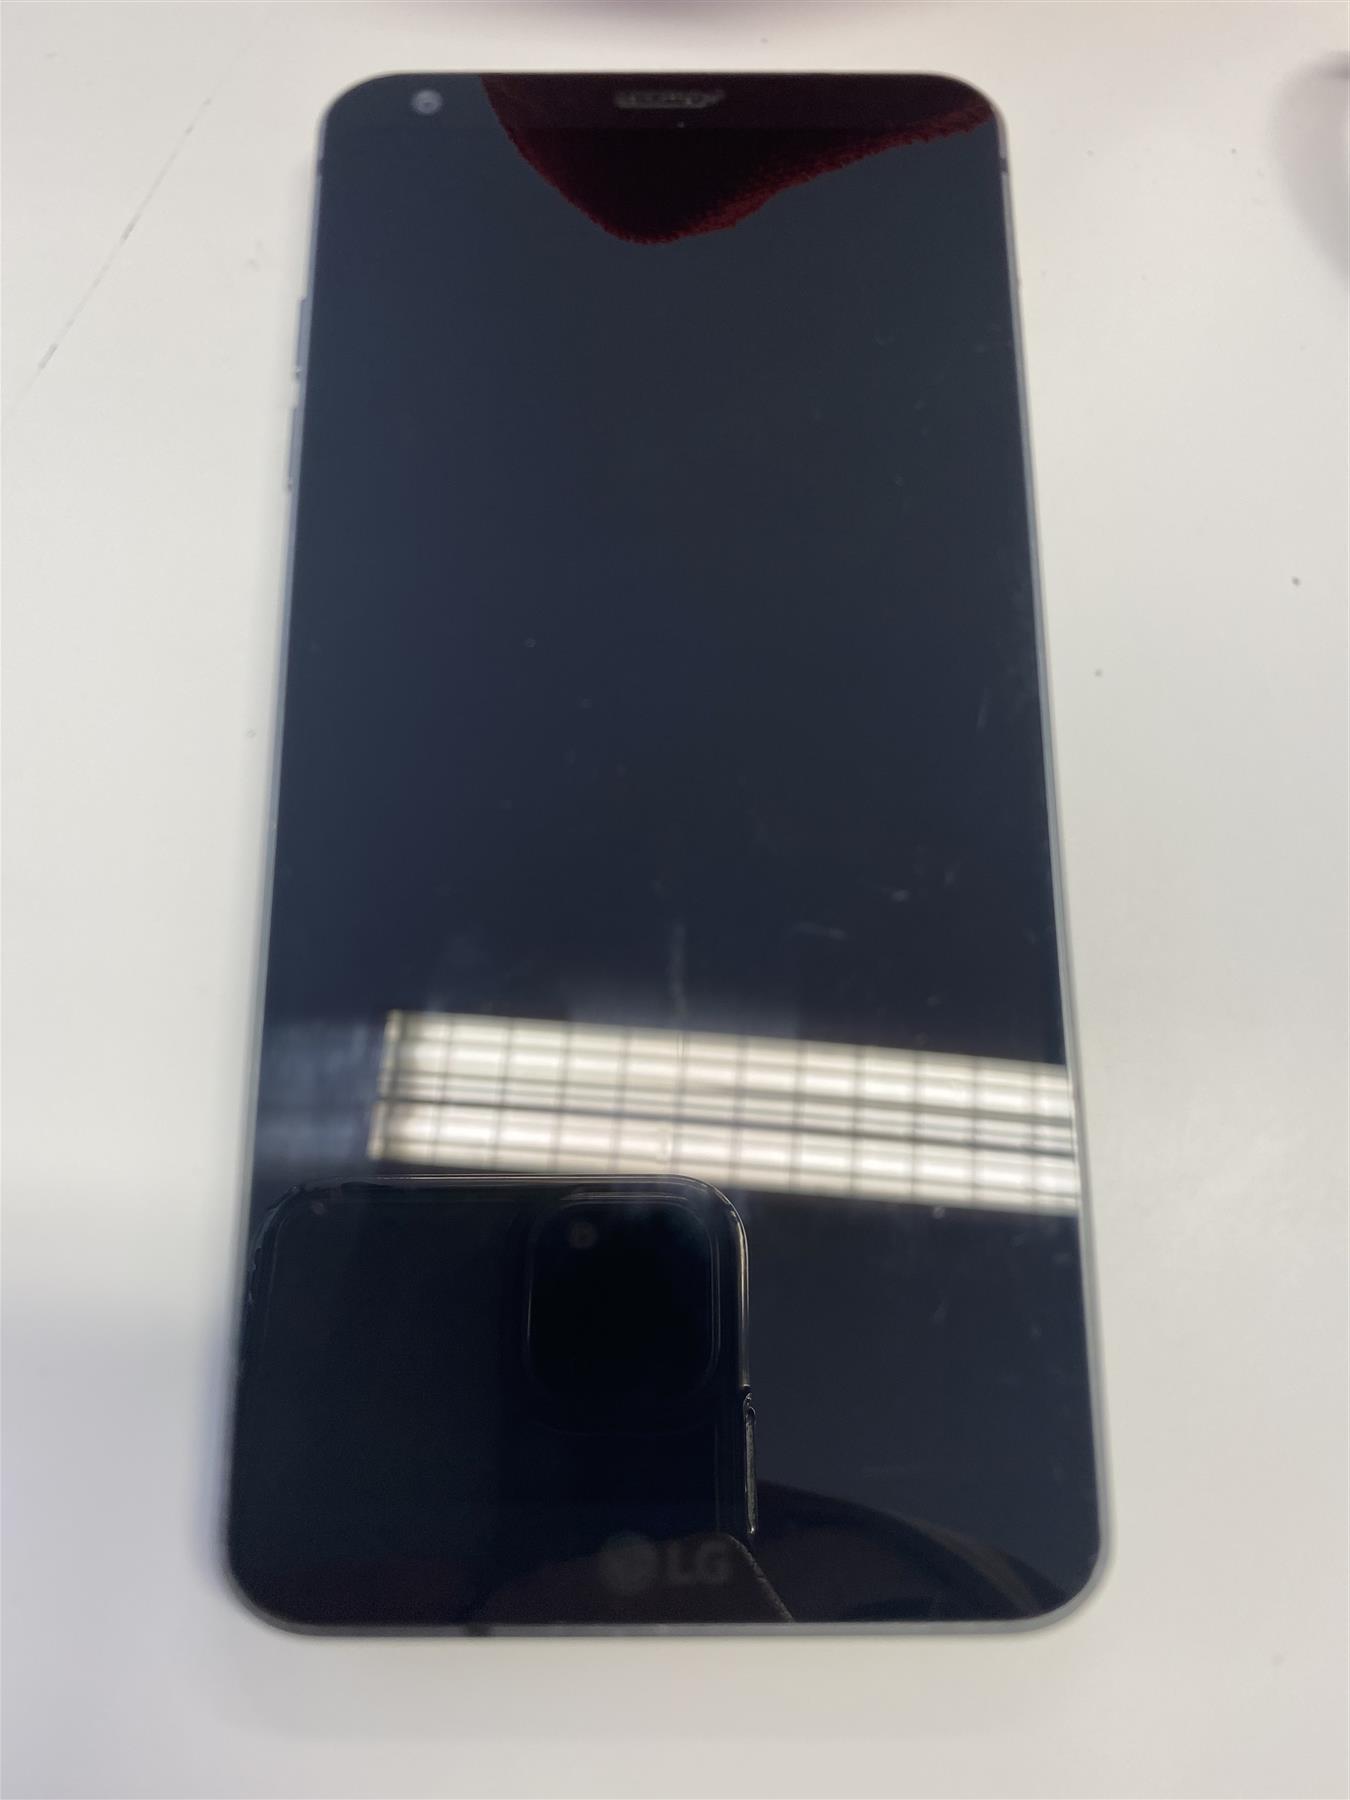 LG G6 32GB Astro Black- Used